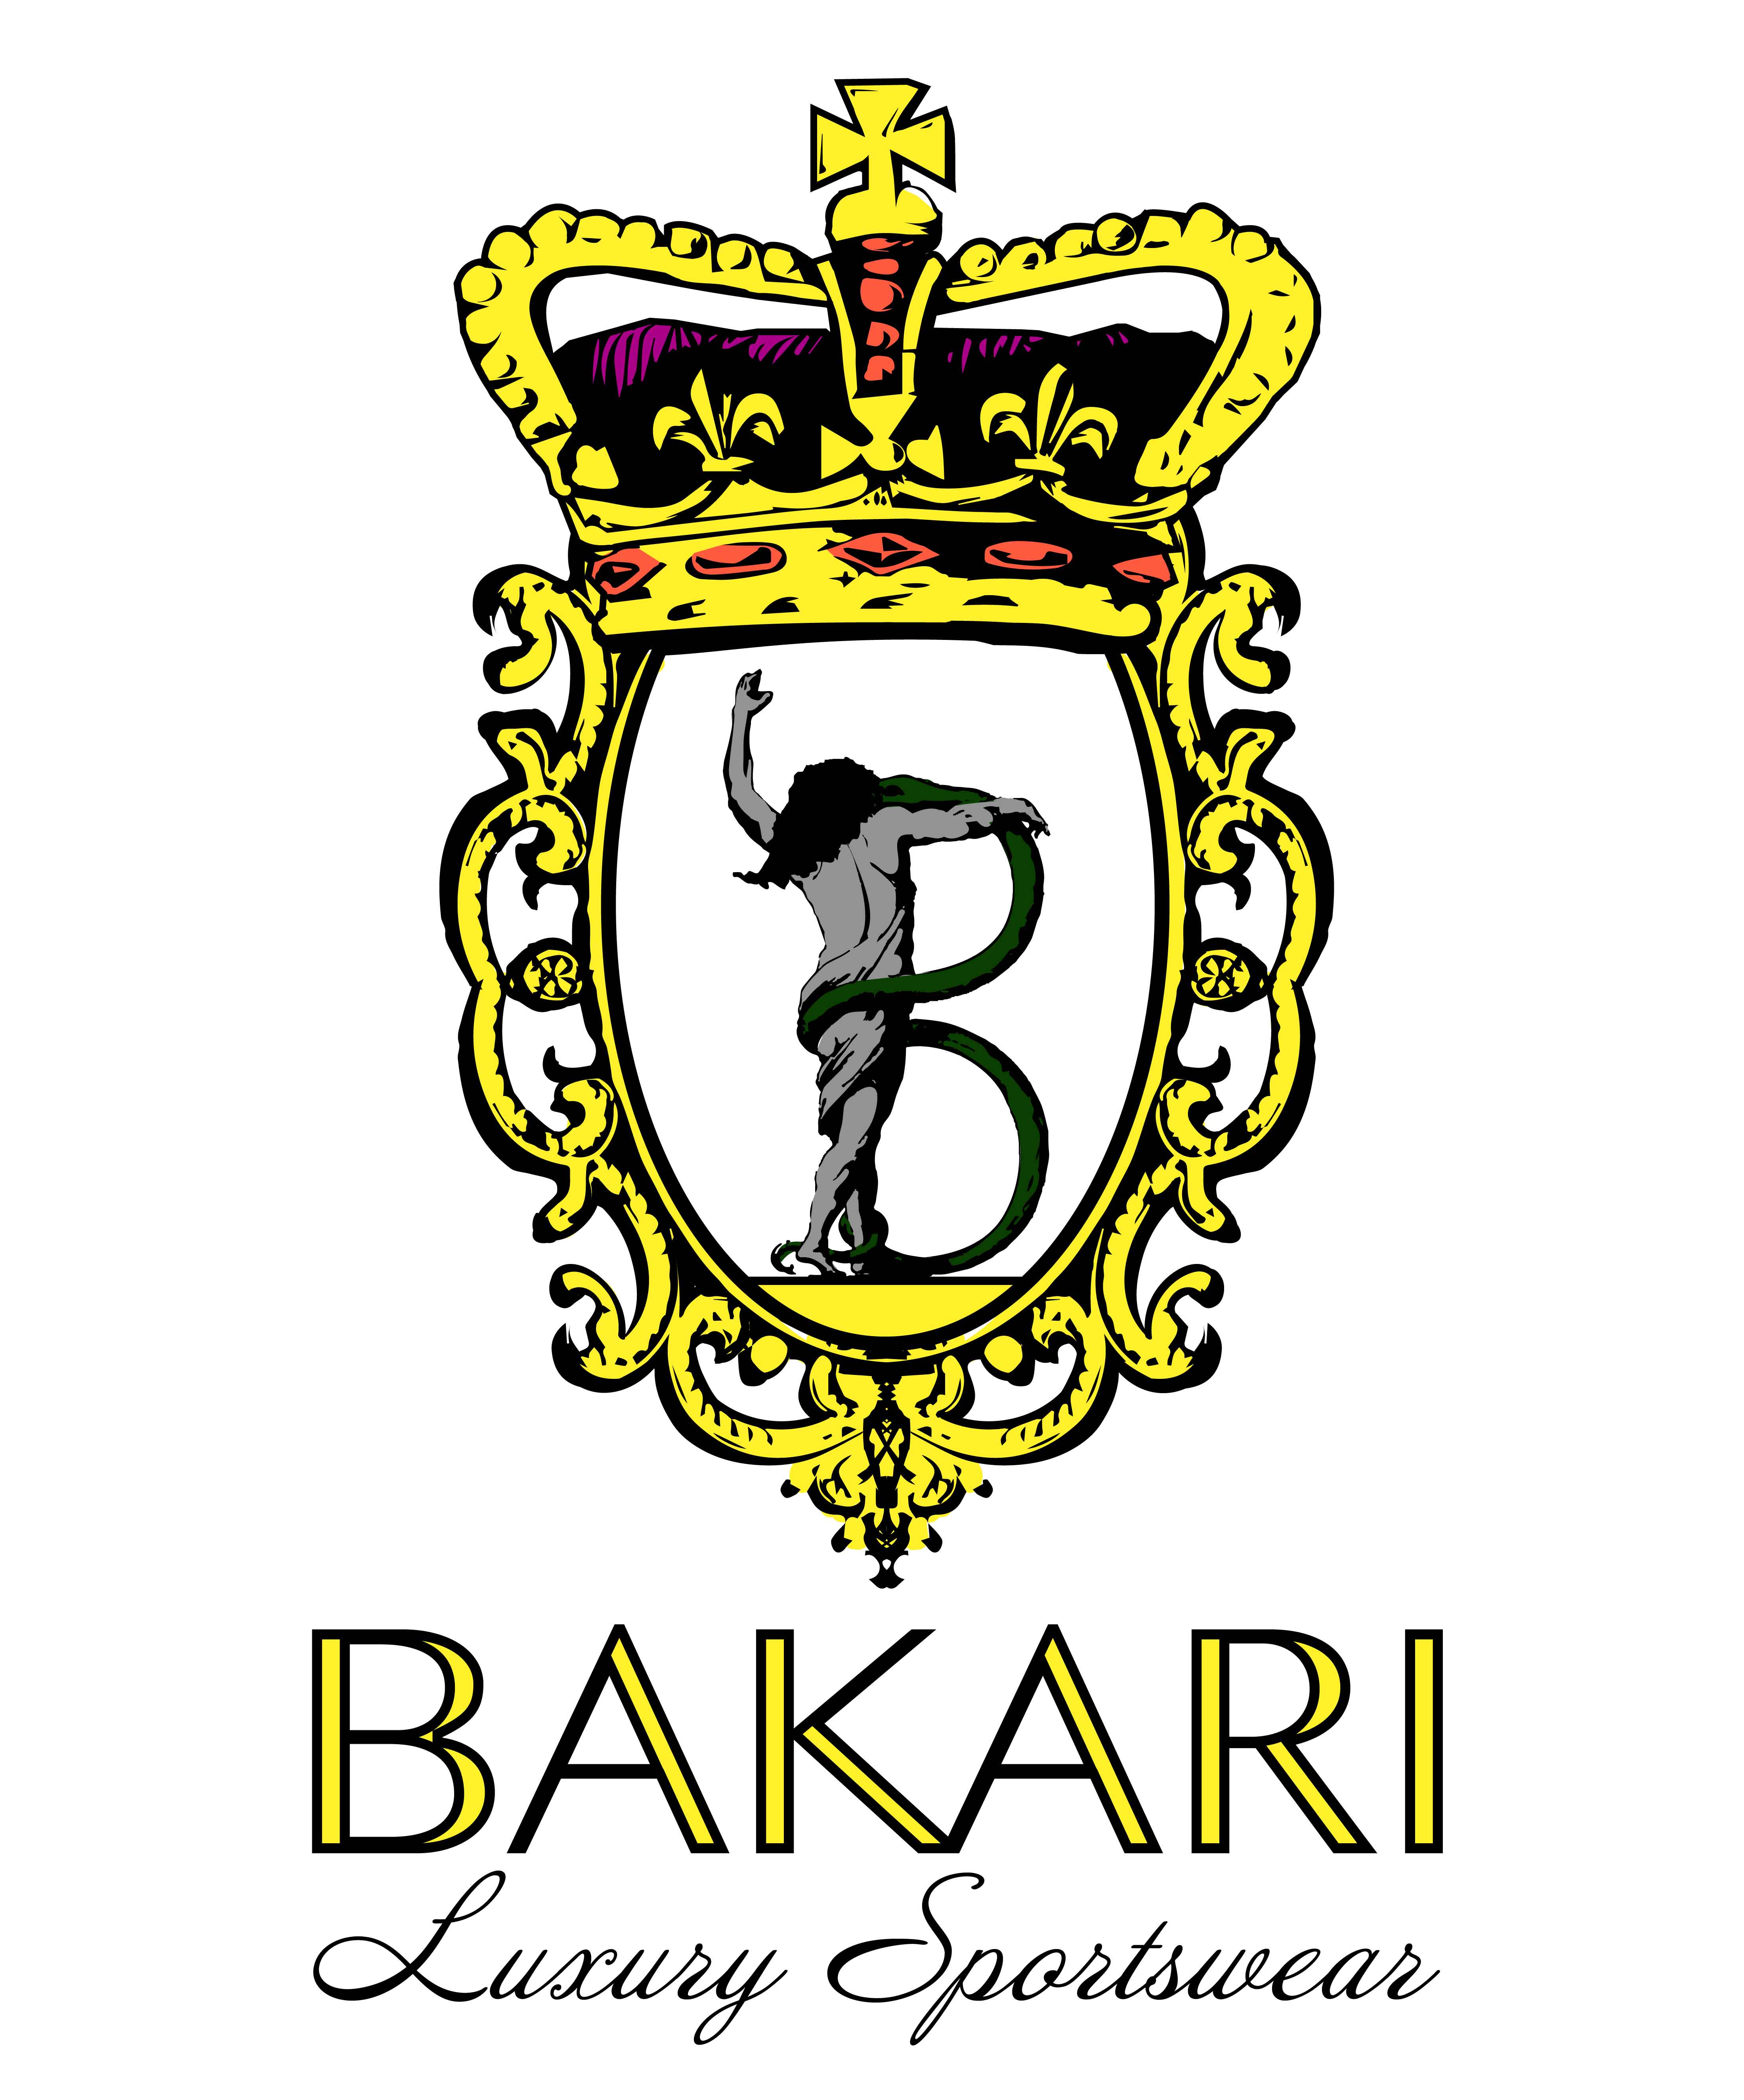 The logo or business face of "Bakari Luxury Sportswear"